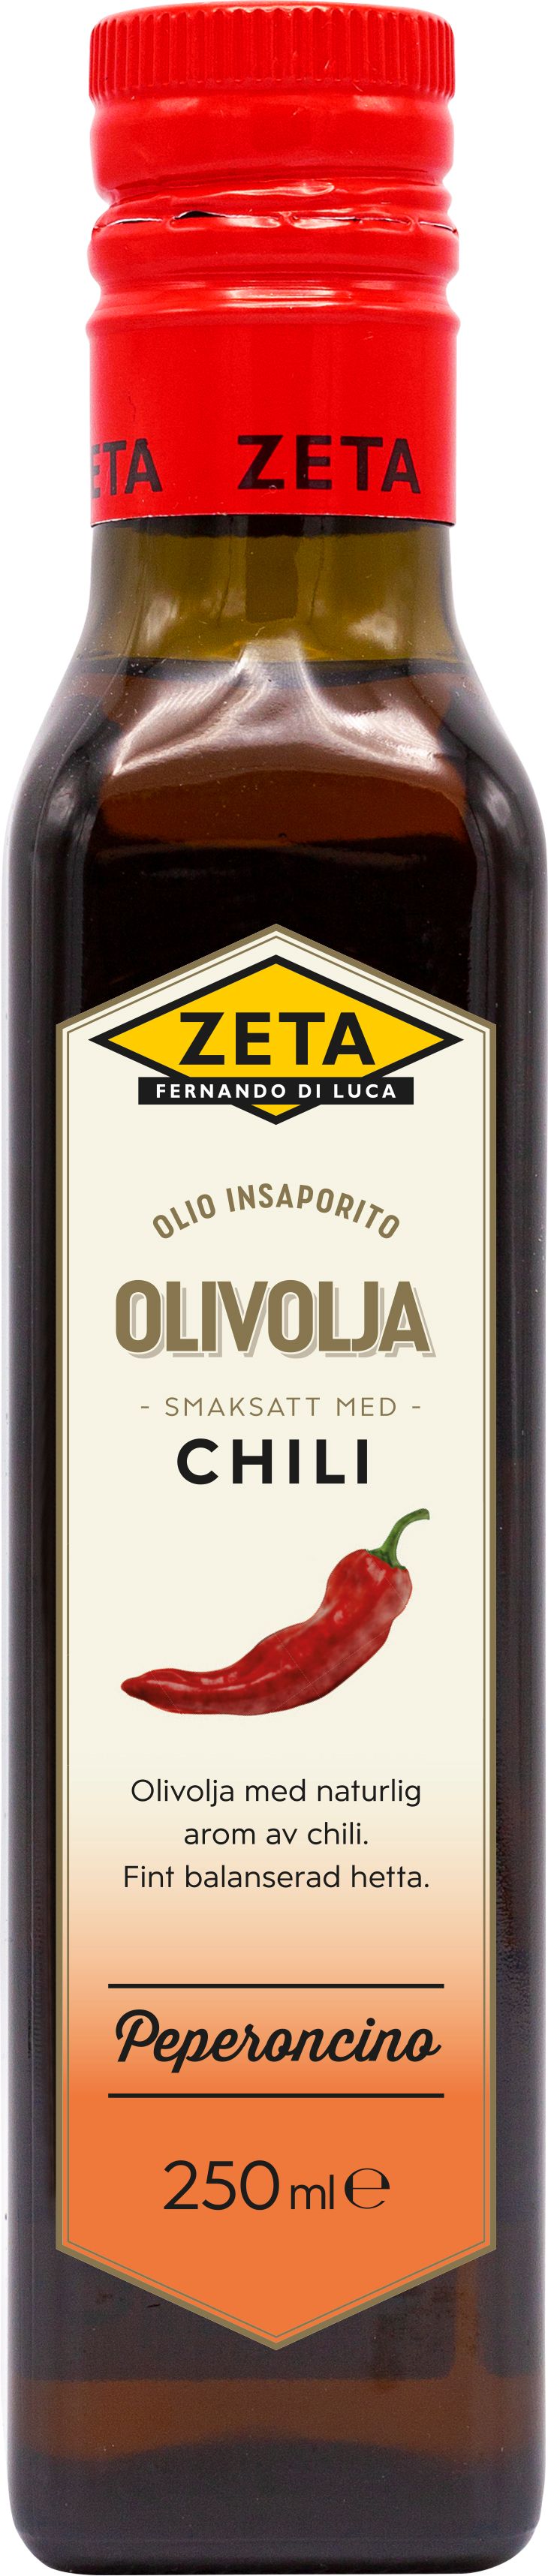 Olivolja Chili